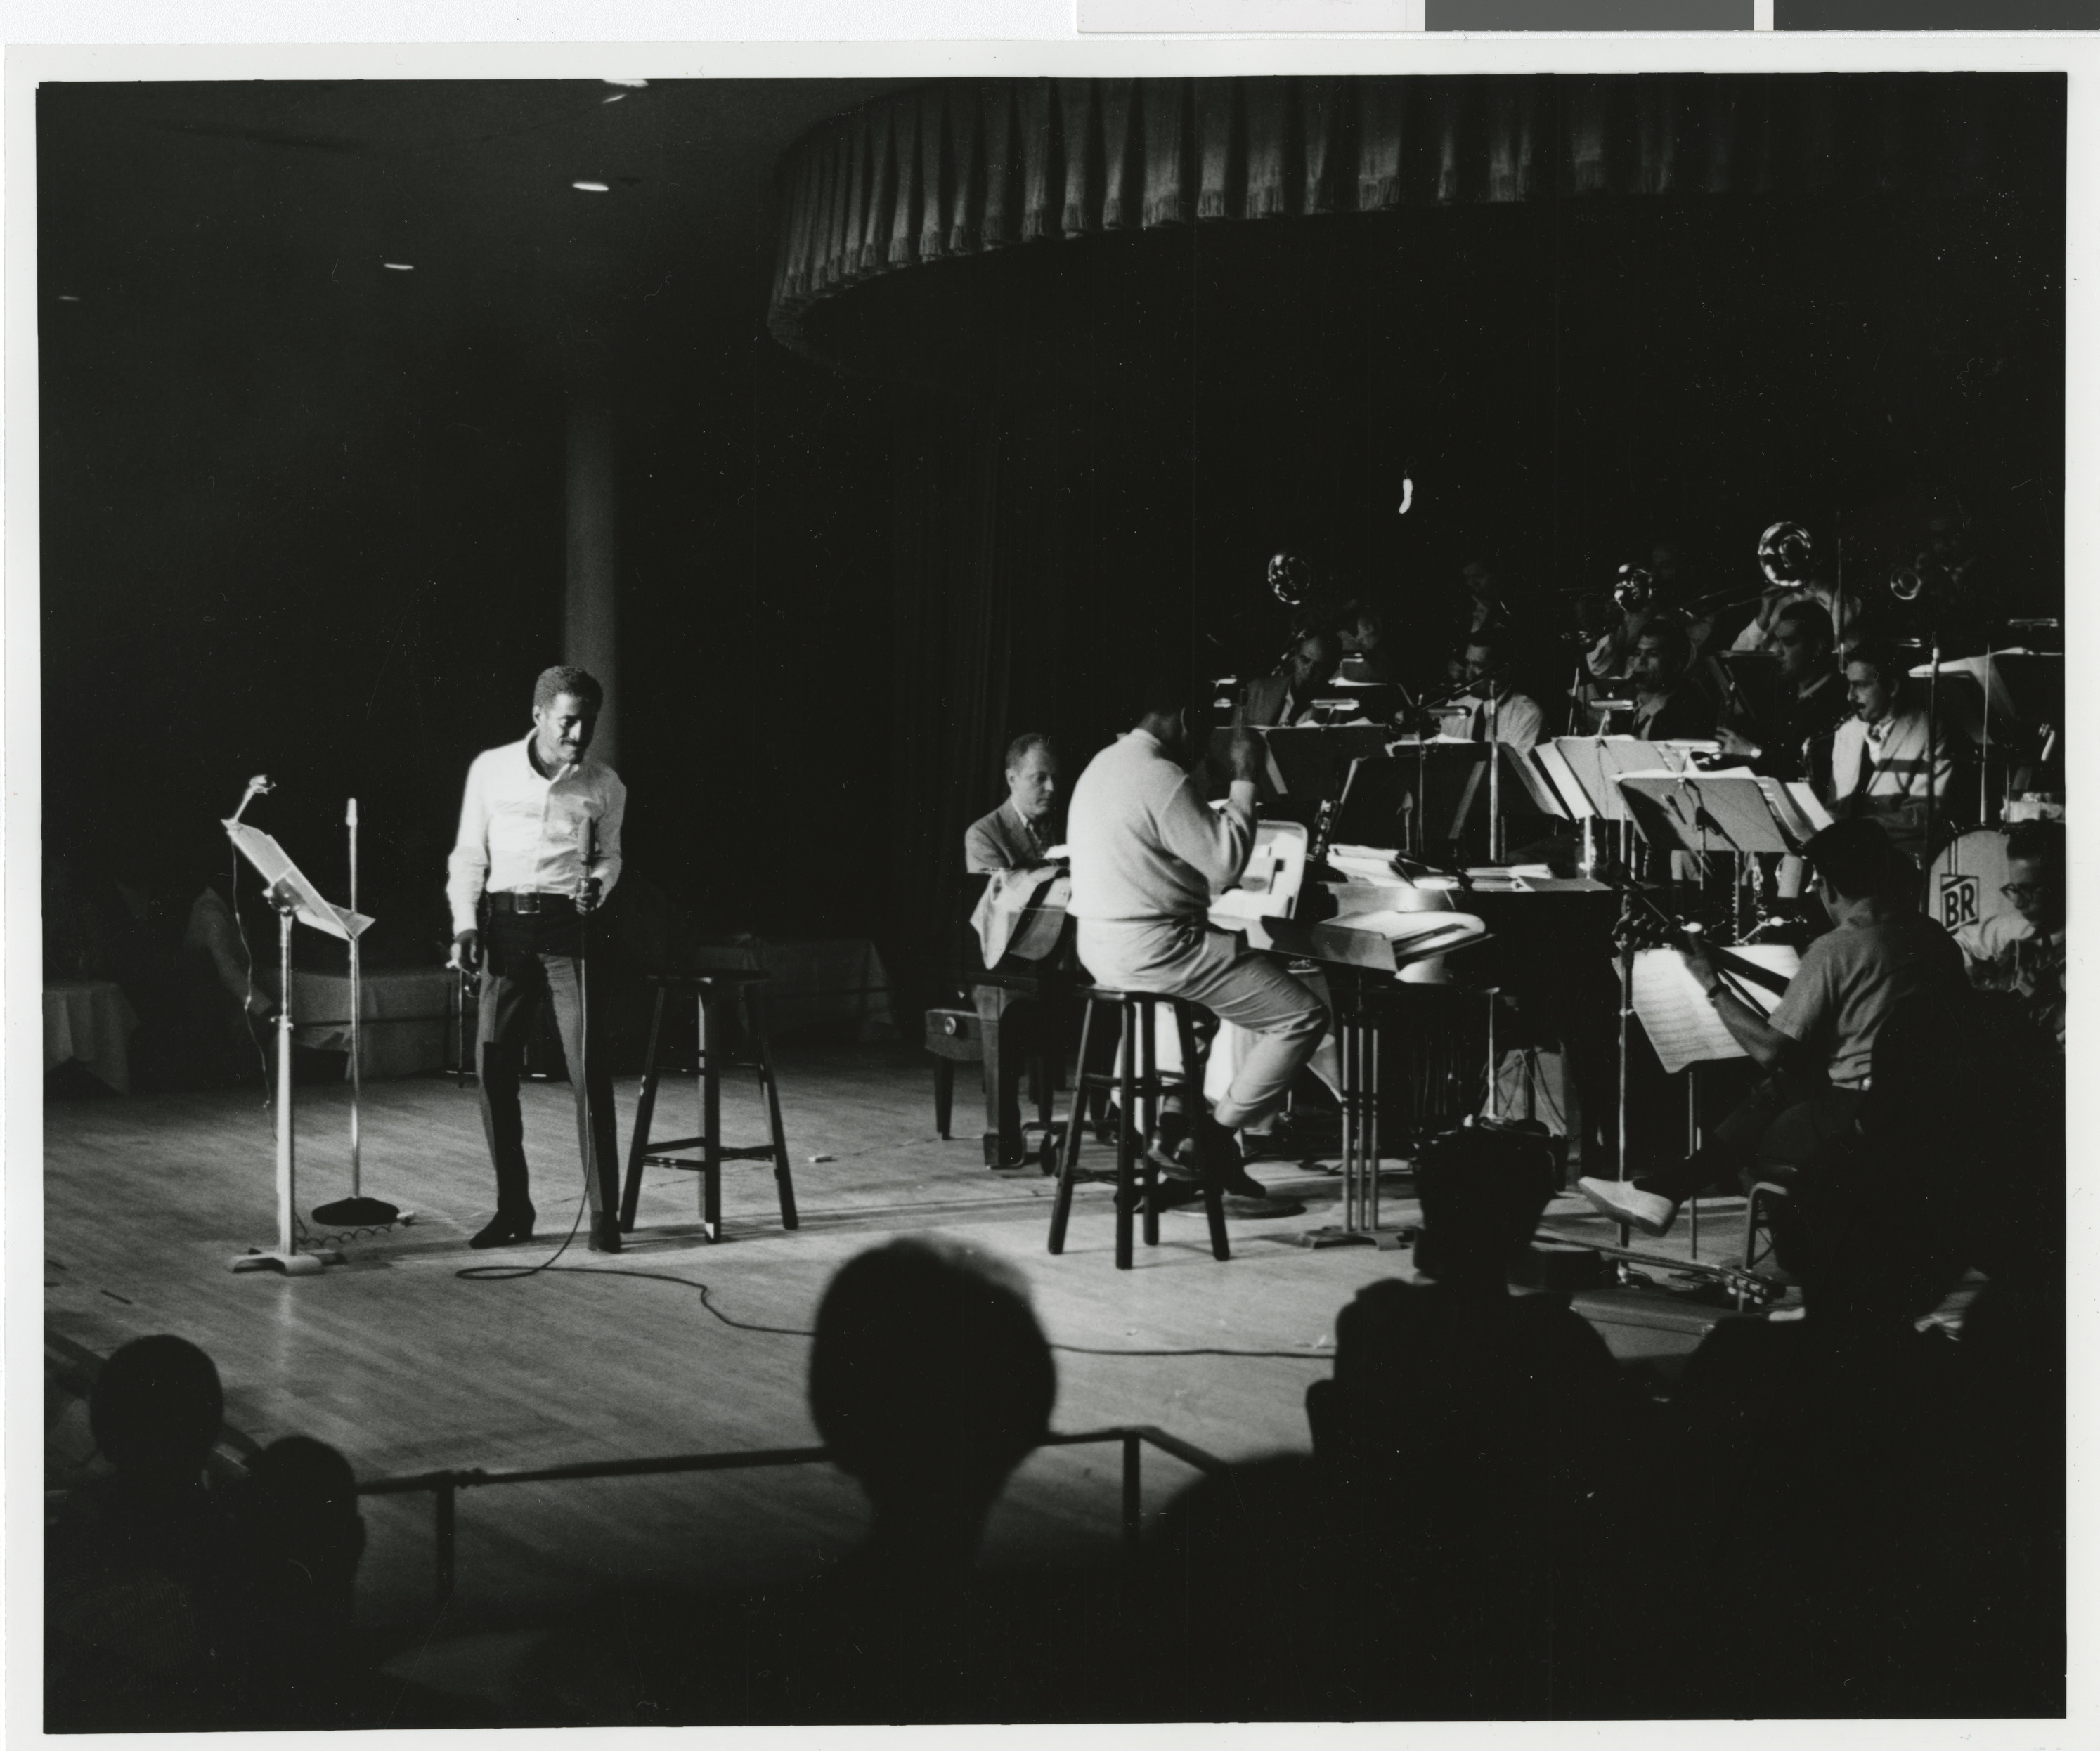 Sammy Davis, Jr. performing, Image 07